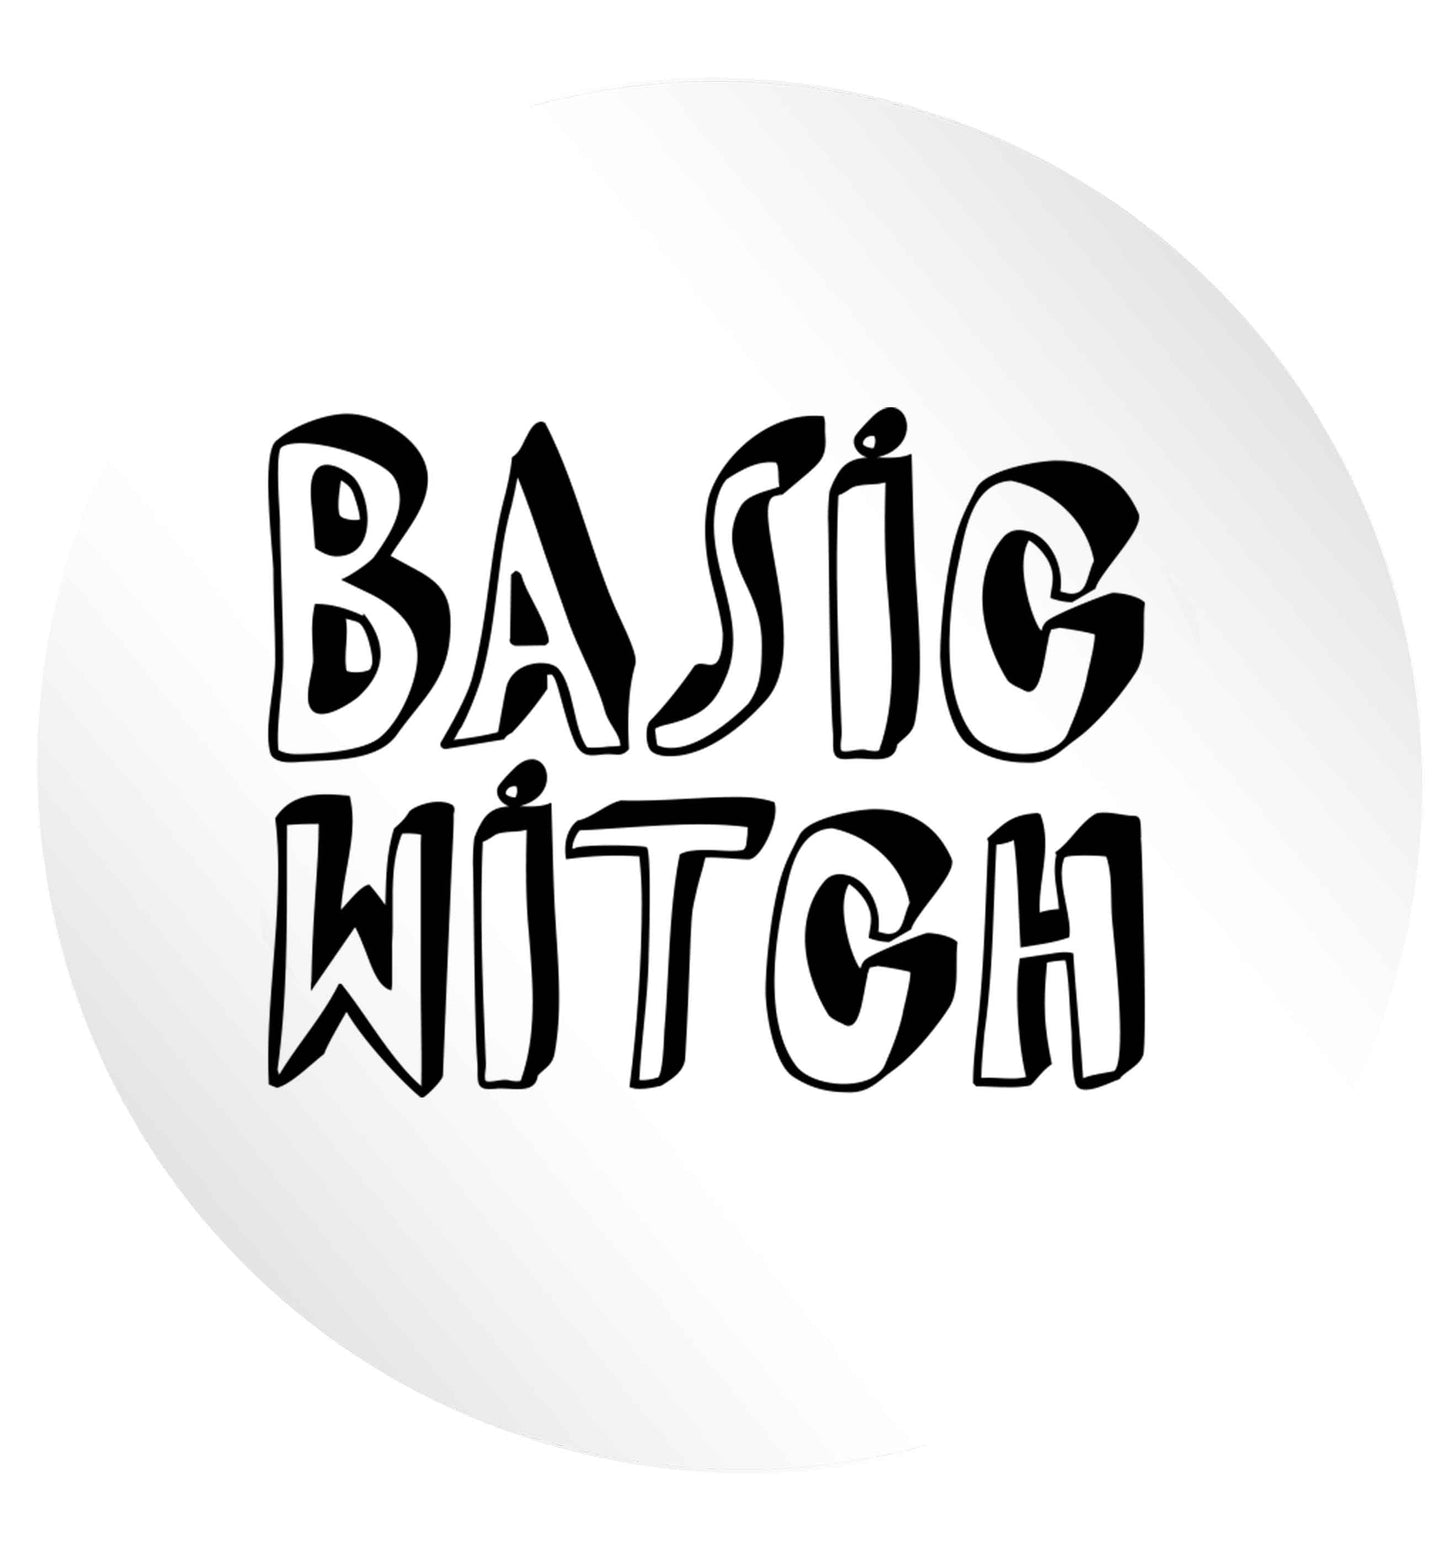 Basic witch 24 @ 45mm matt circle stickers